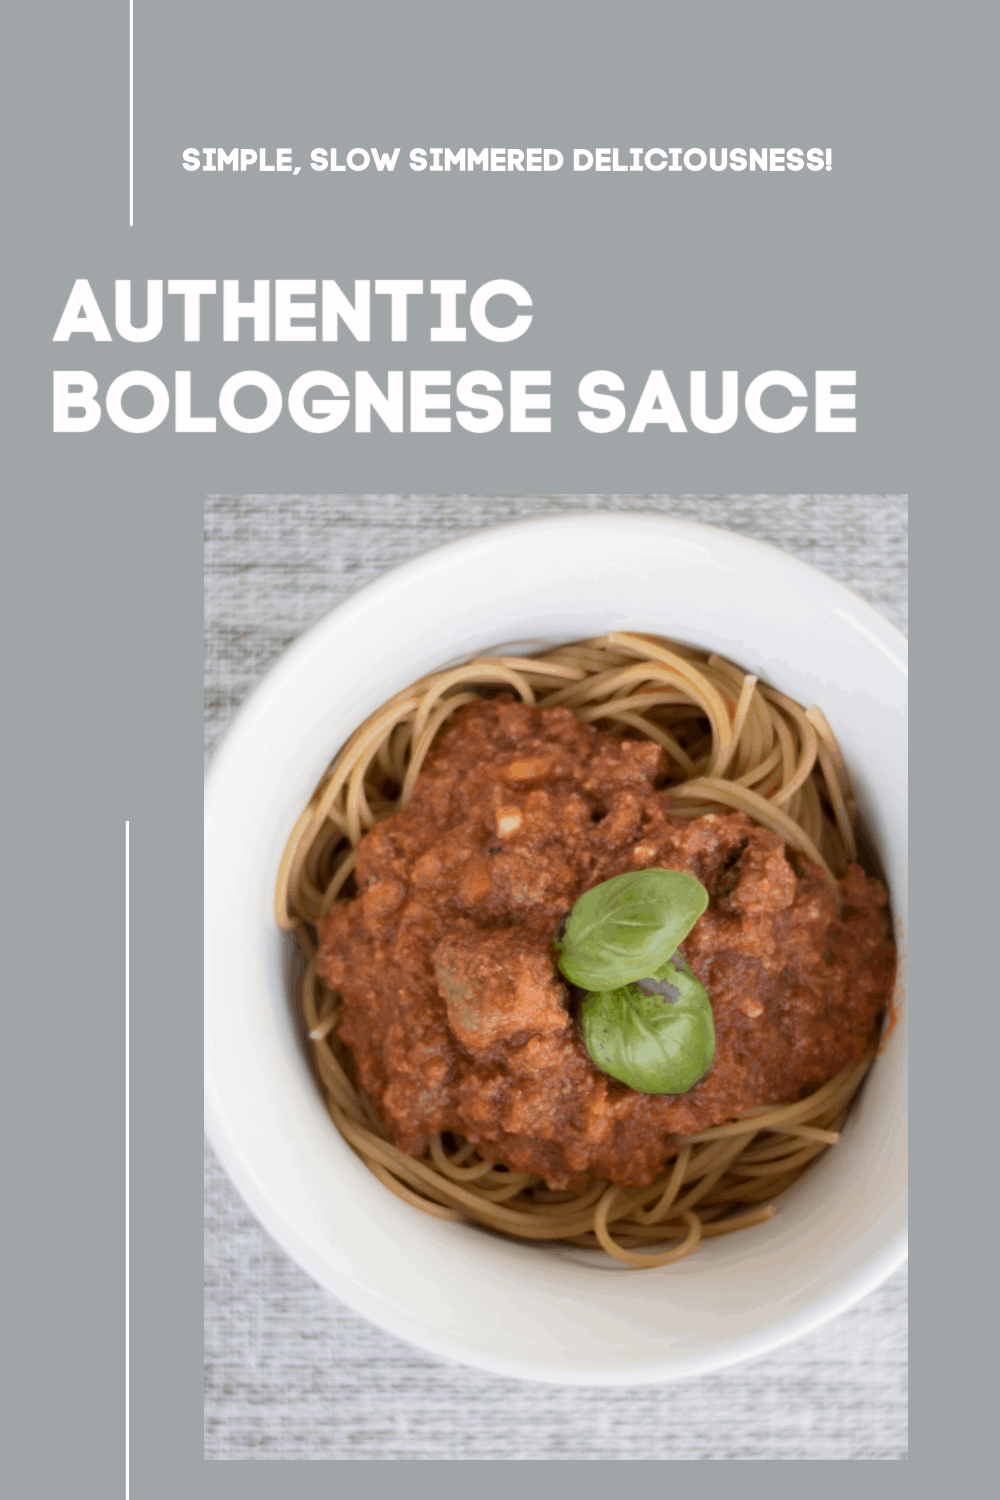 bolognese sauce